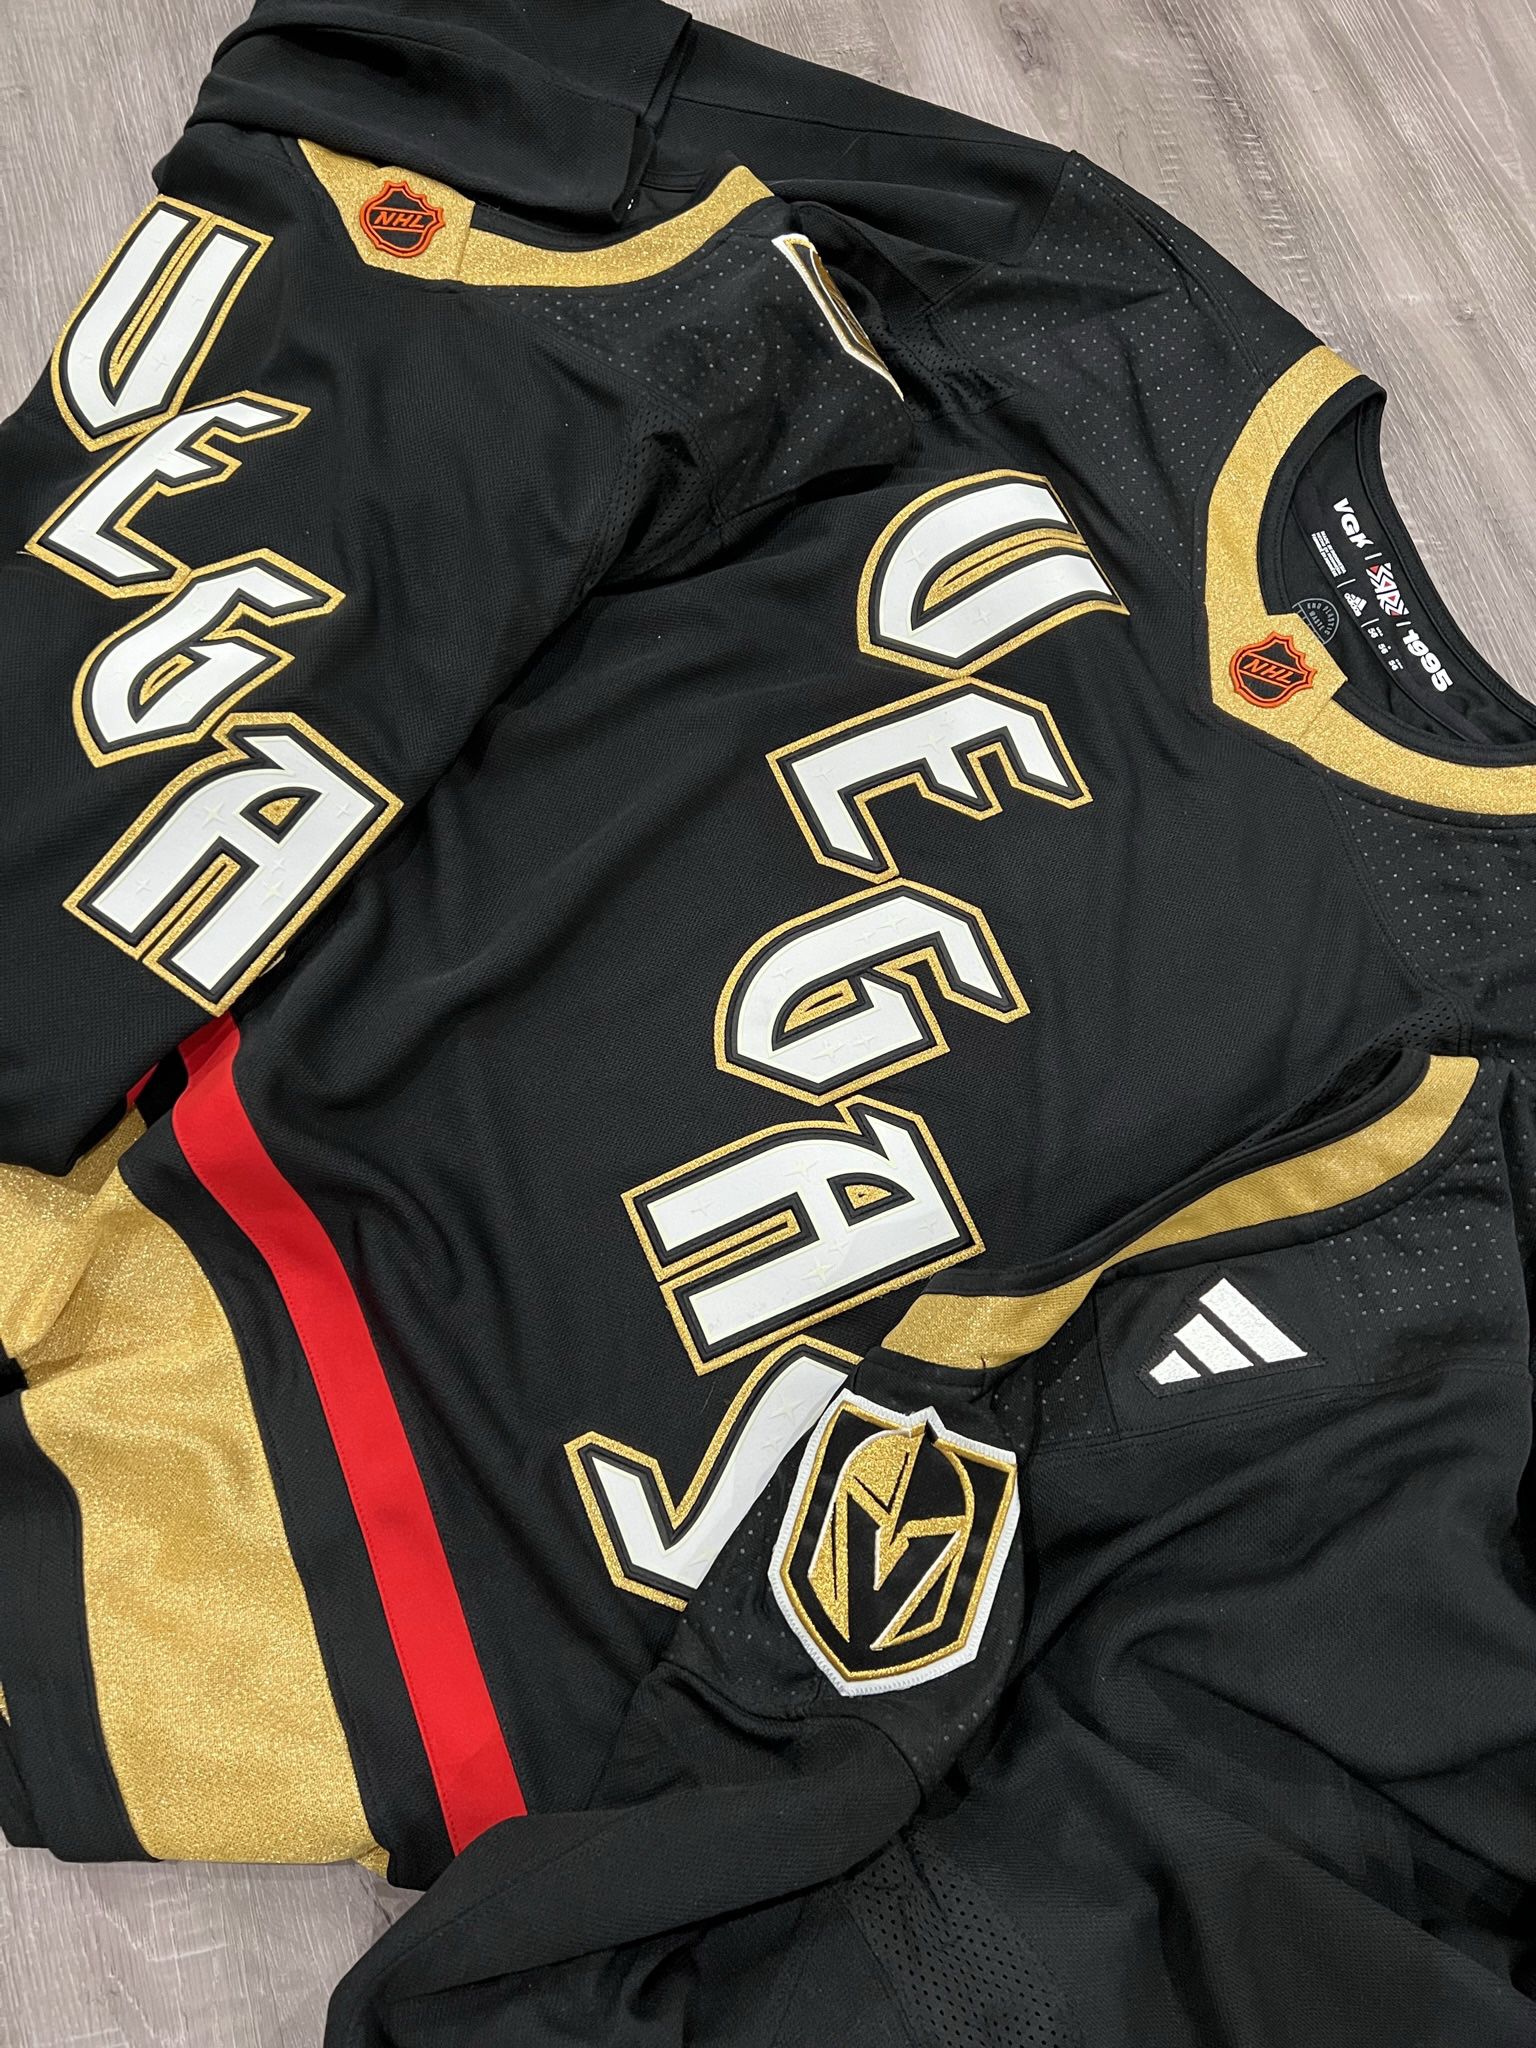 Vegas Golden Knights -Red Retro Hockey Jersey VGK for Sale in Las Vegas, NV  - OfferUp